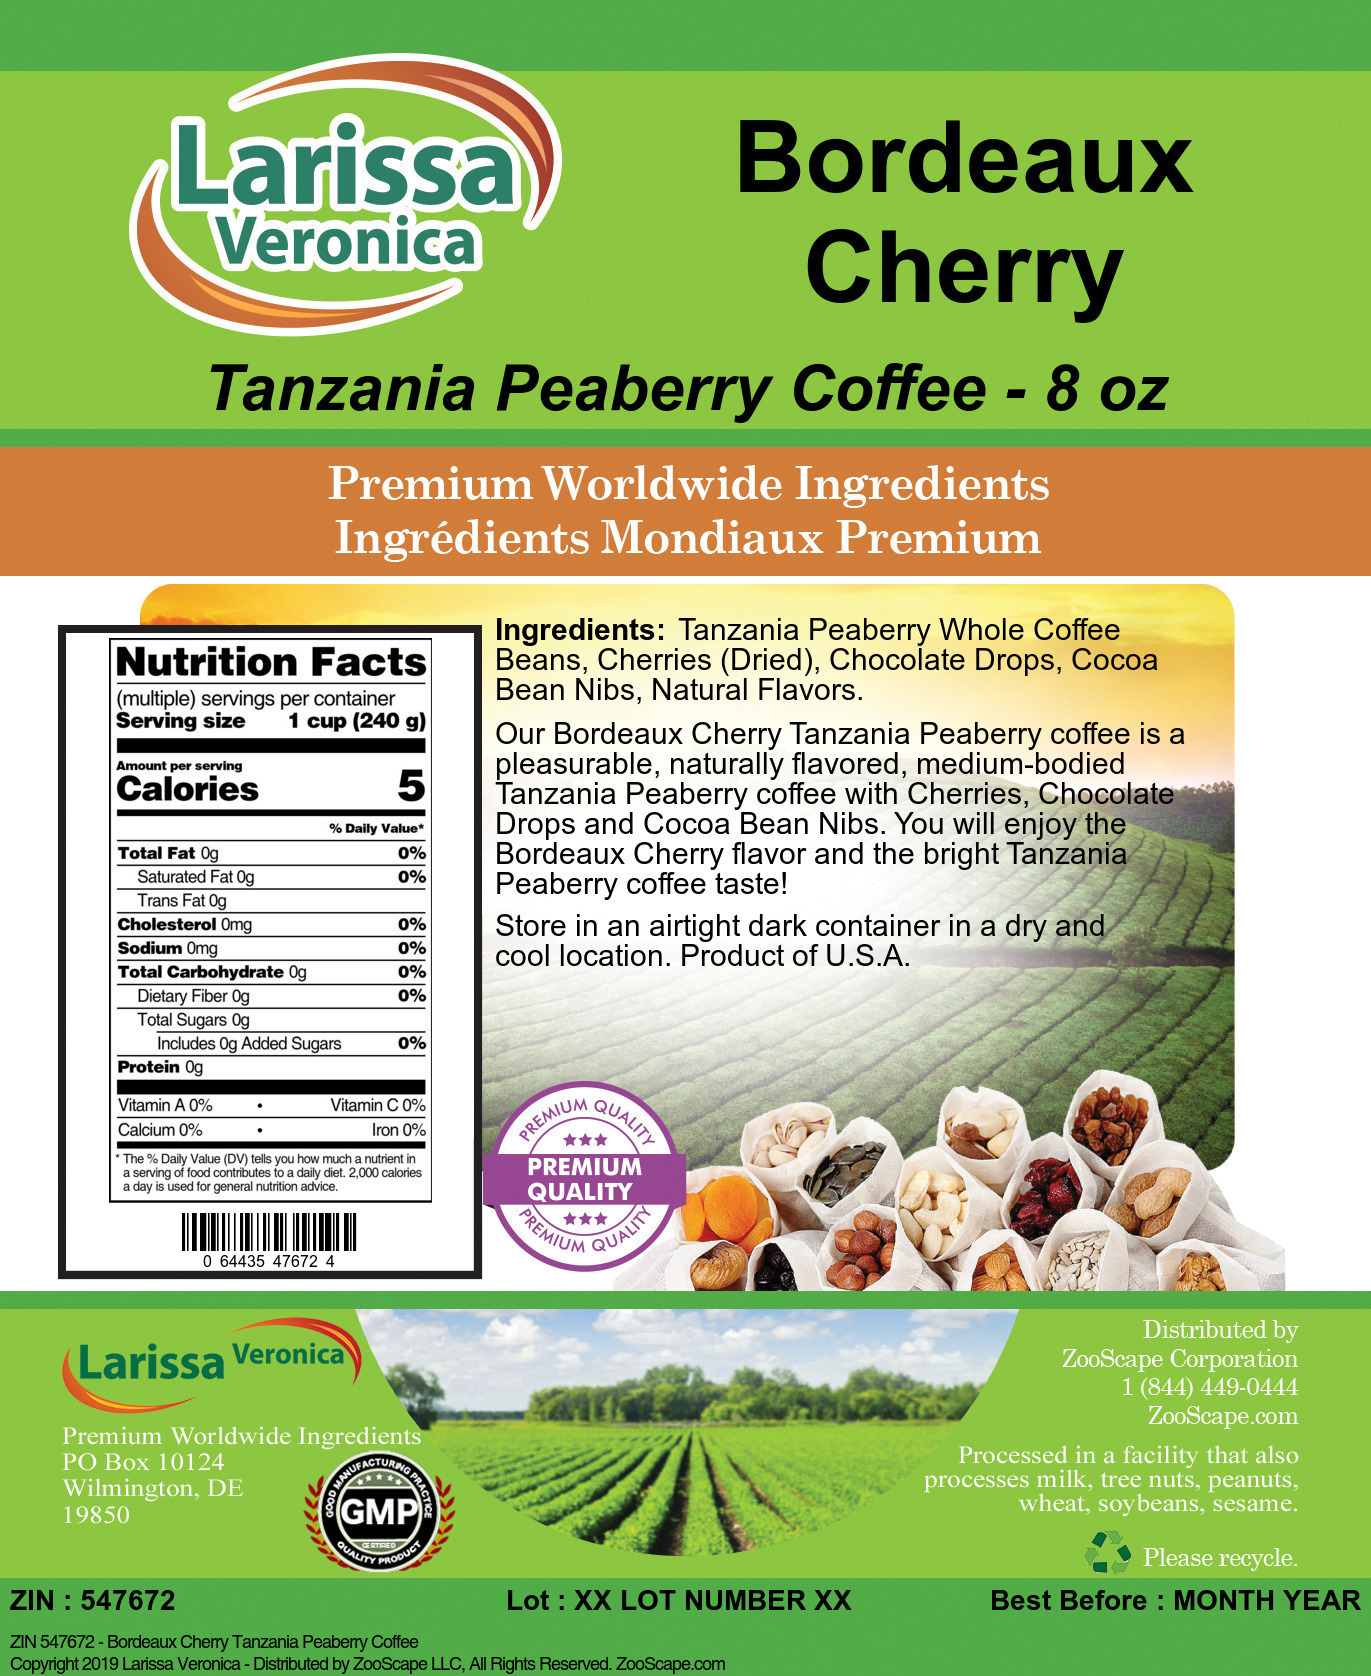 Bordeaux Cherry Tanzania Peaberry Coffee - Label